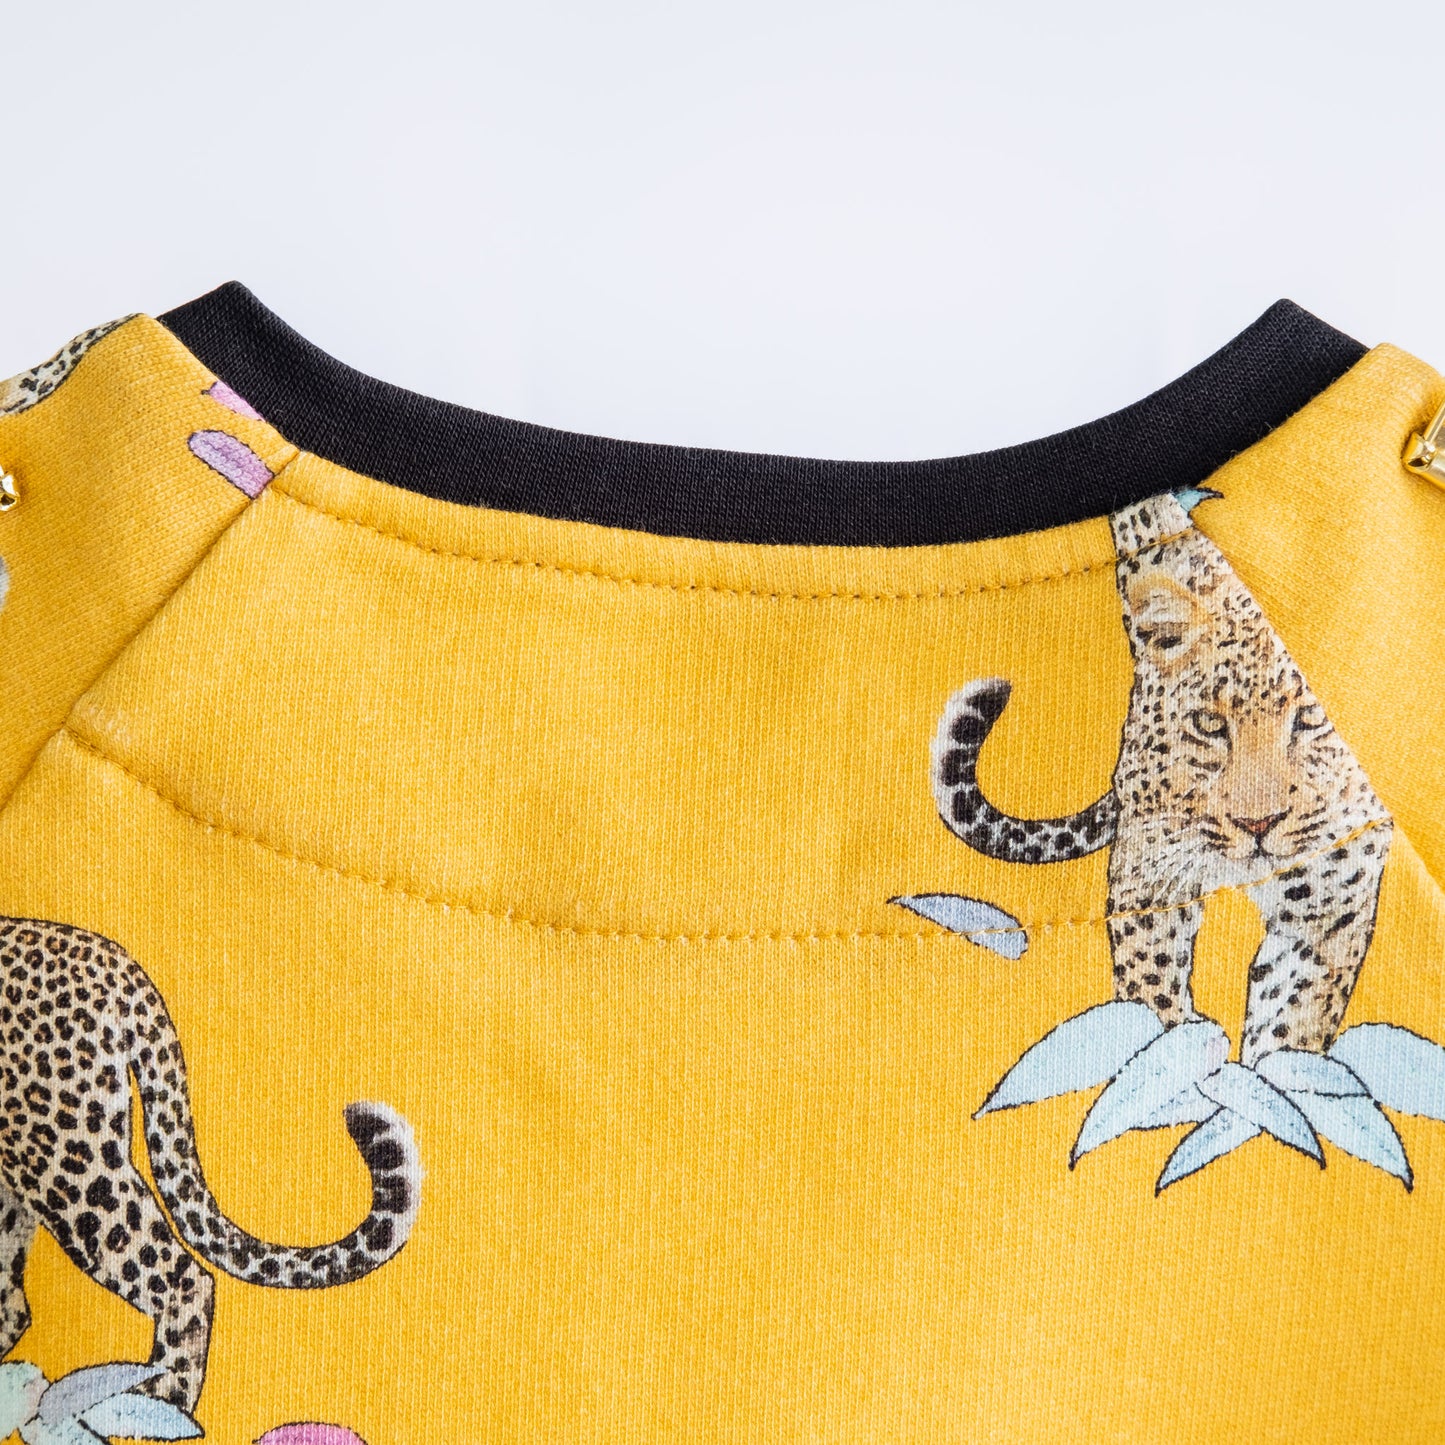 Yellow Leopard Dress